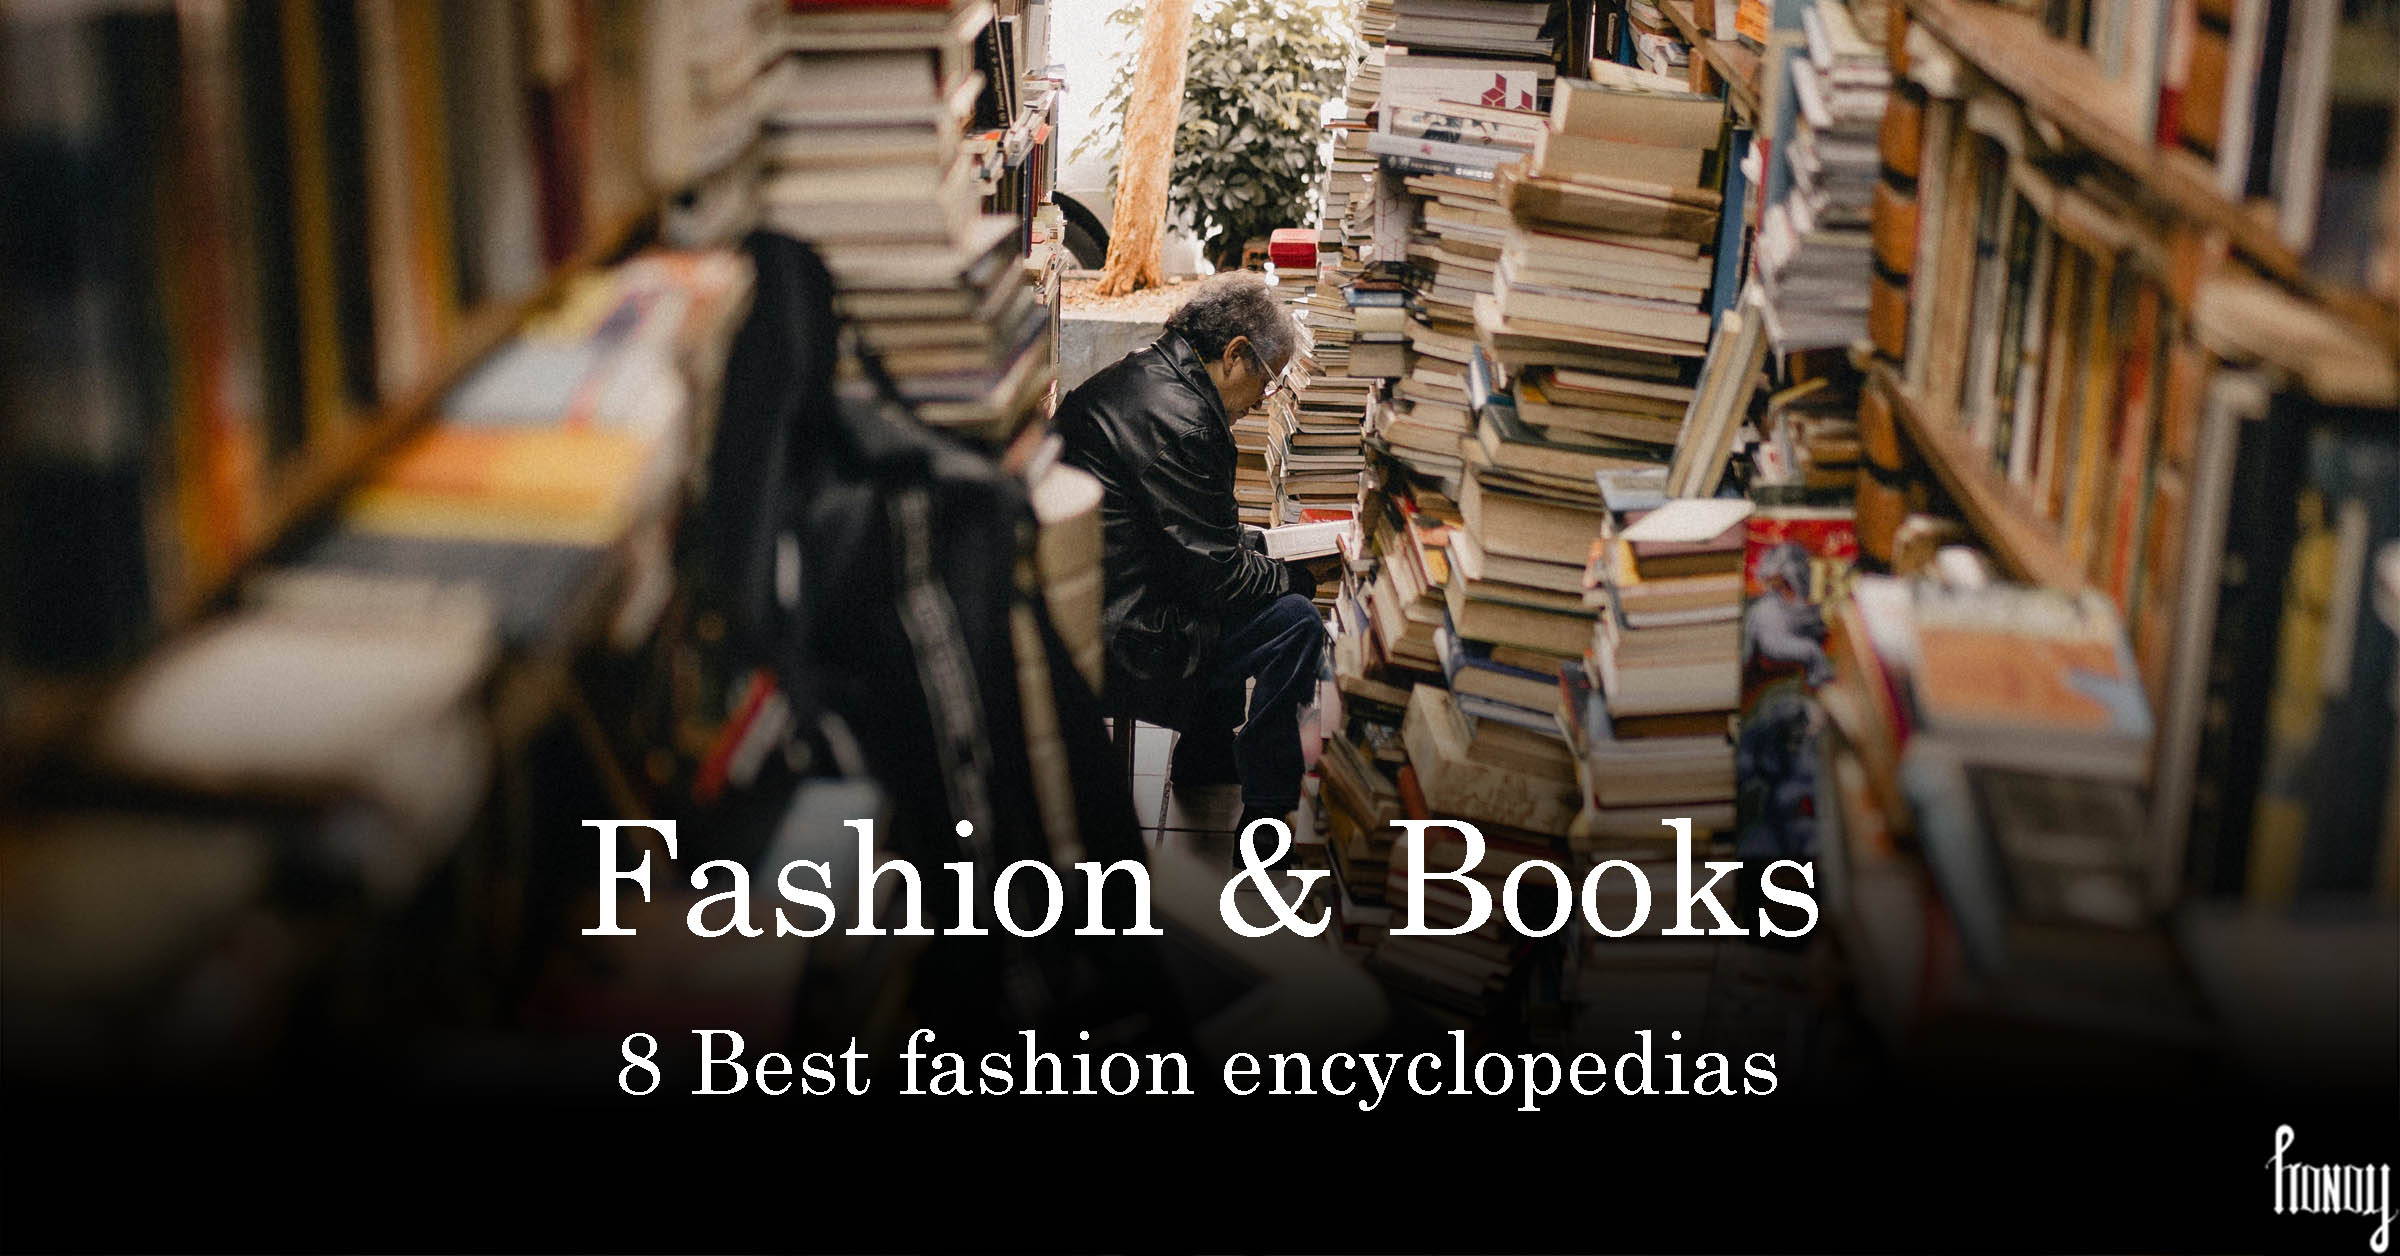 8 Best fashion encyclopedias